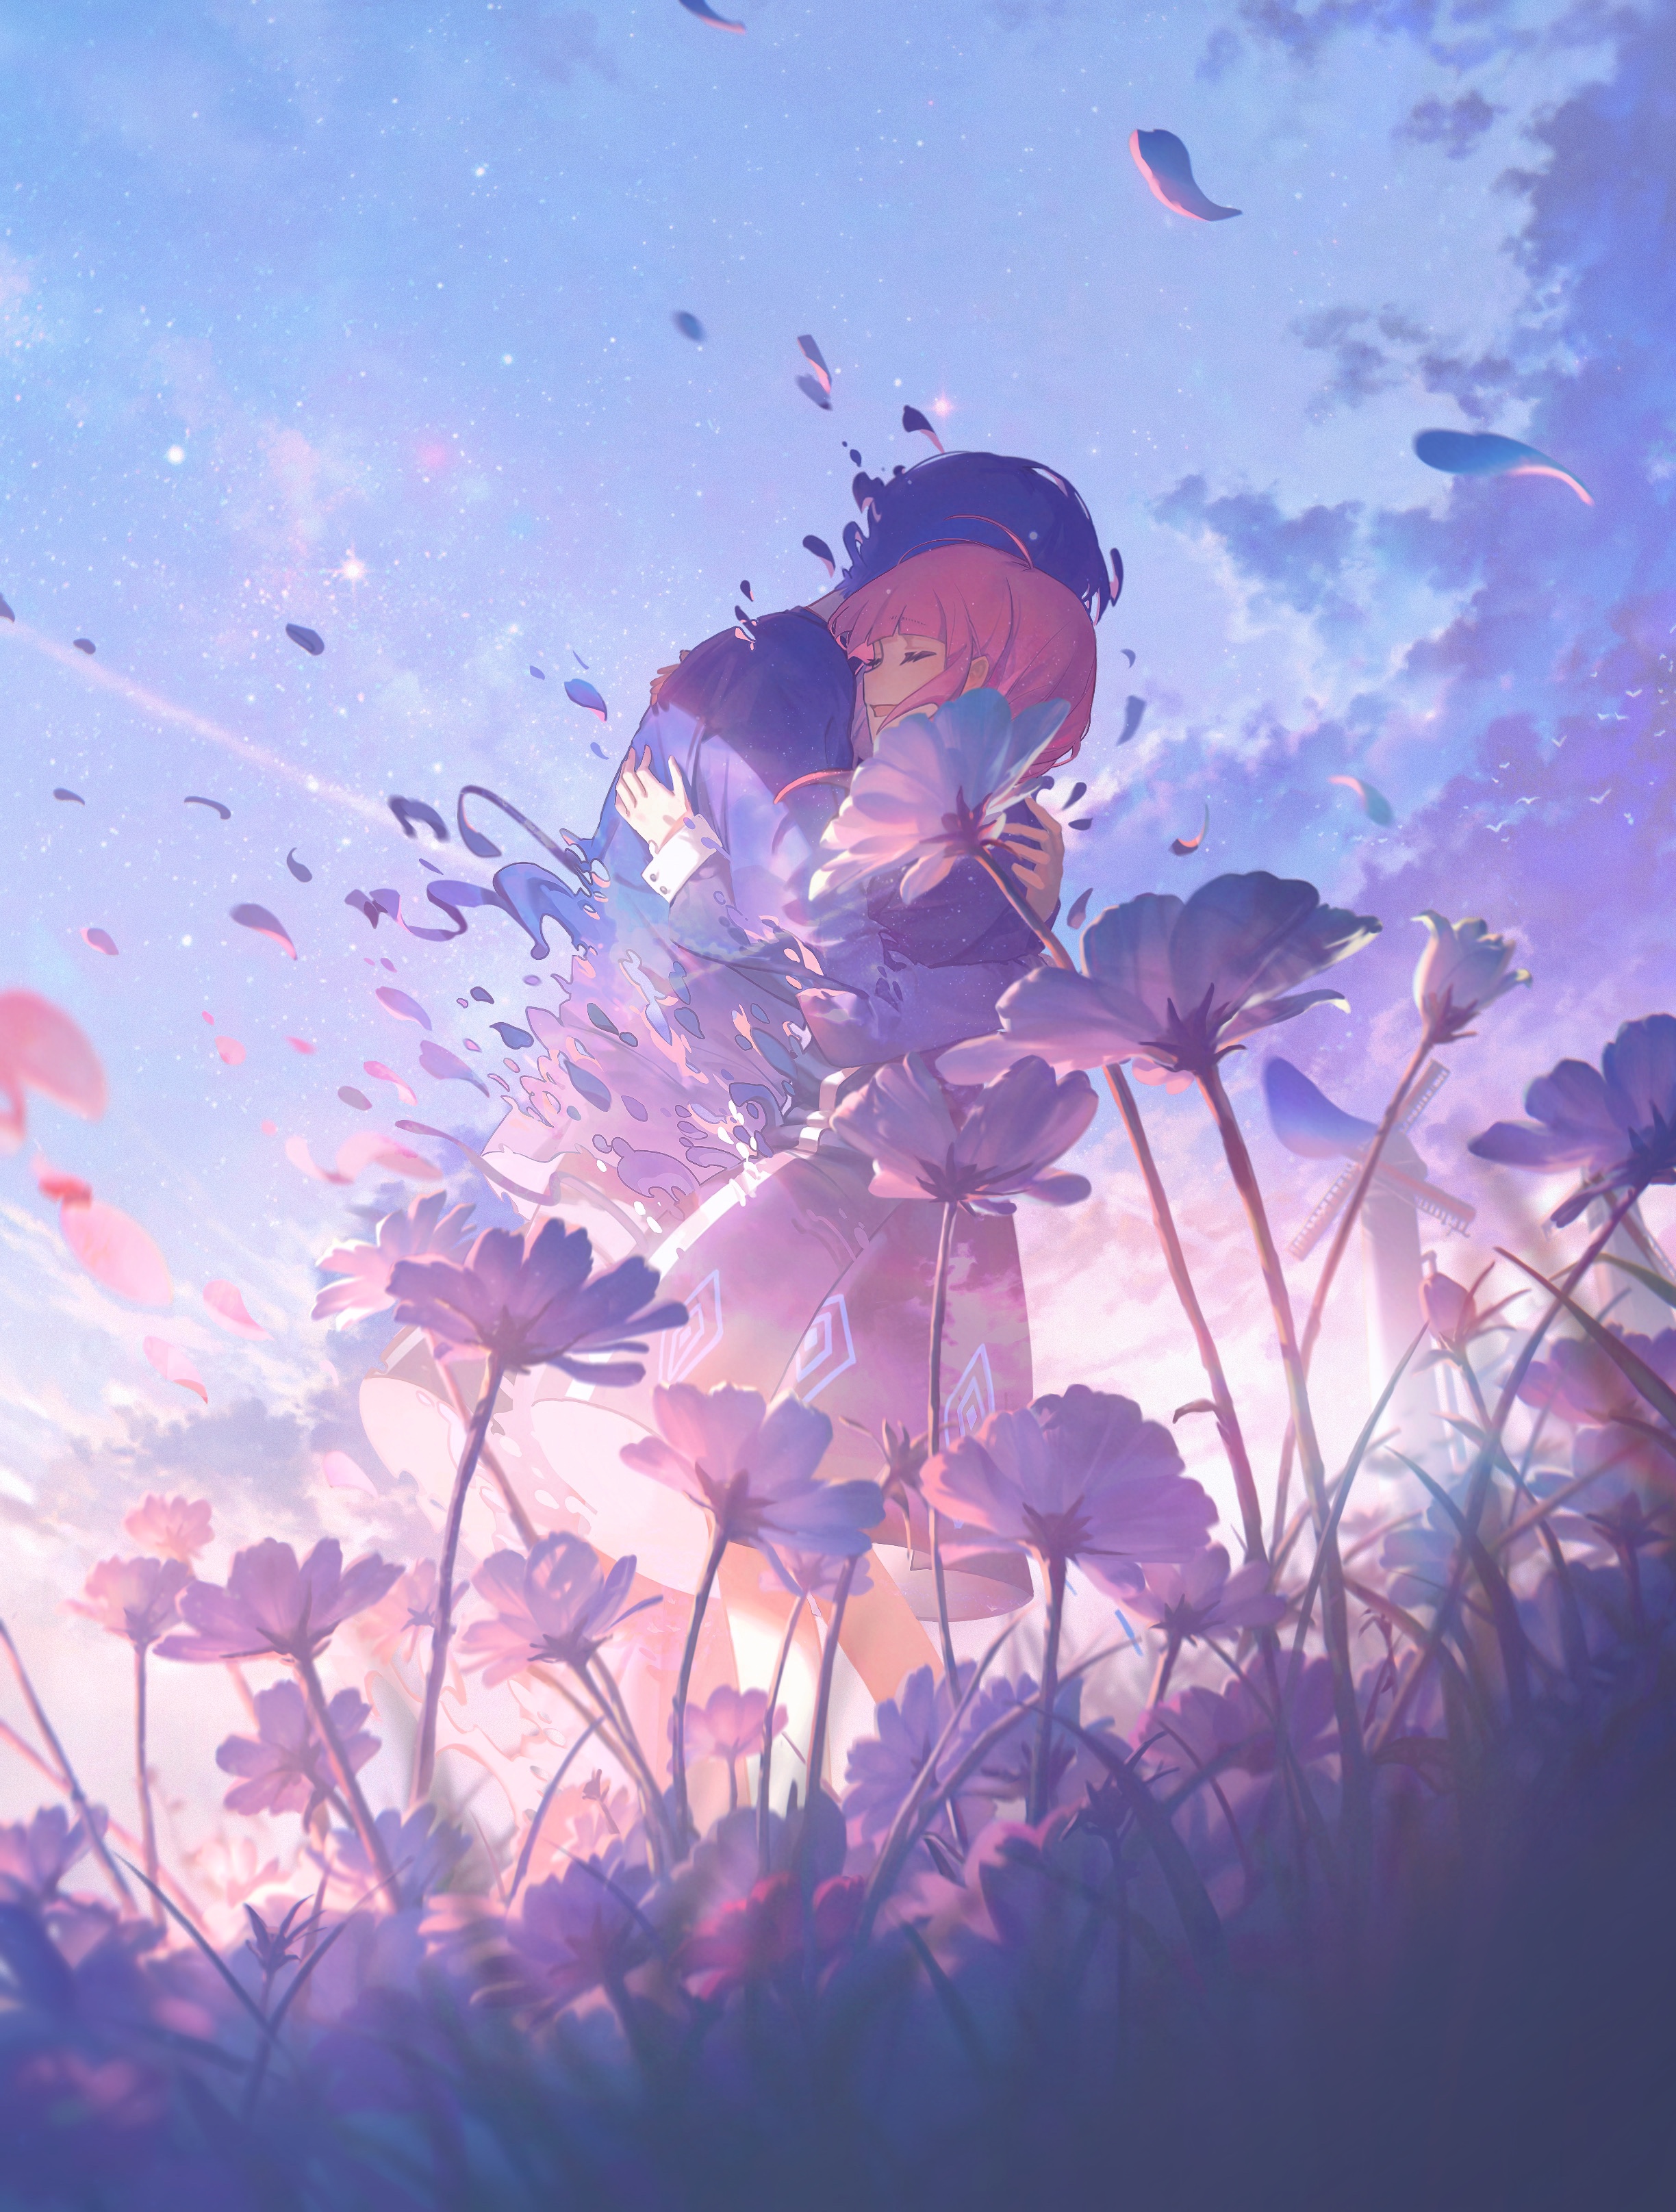 Anime 2448x3231 Pixiv anime anime girls portrait display flowers sky clouds hugging anime boys closed eyes petals sunset sunset glow stars couple